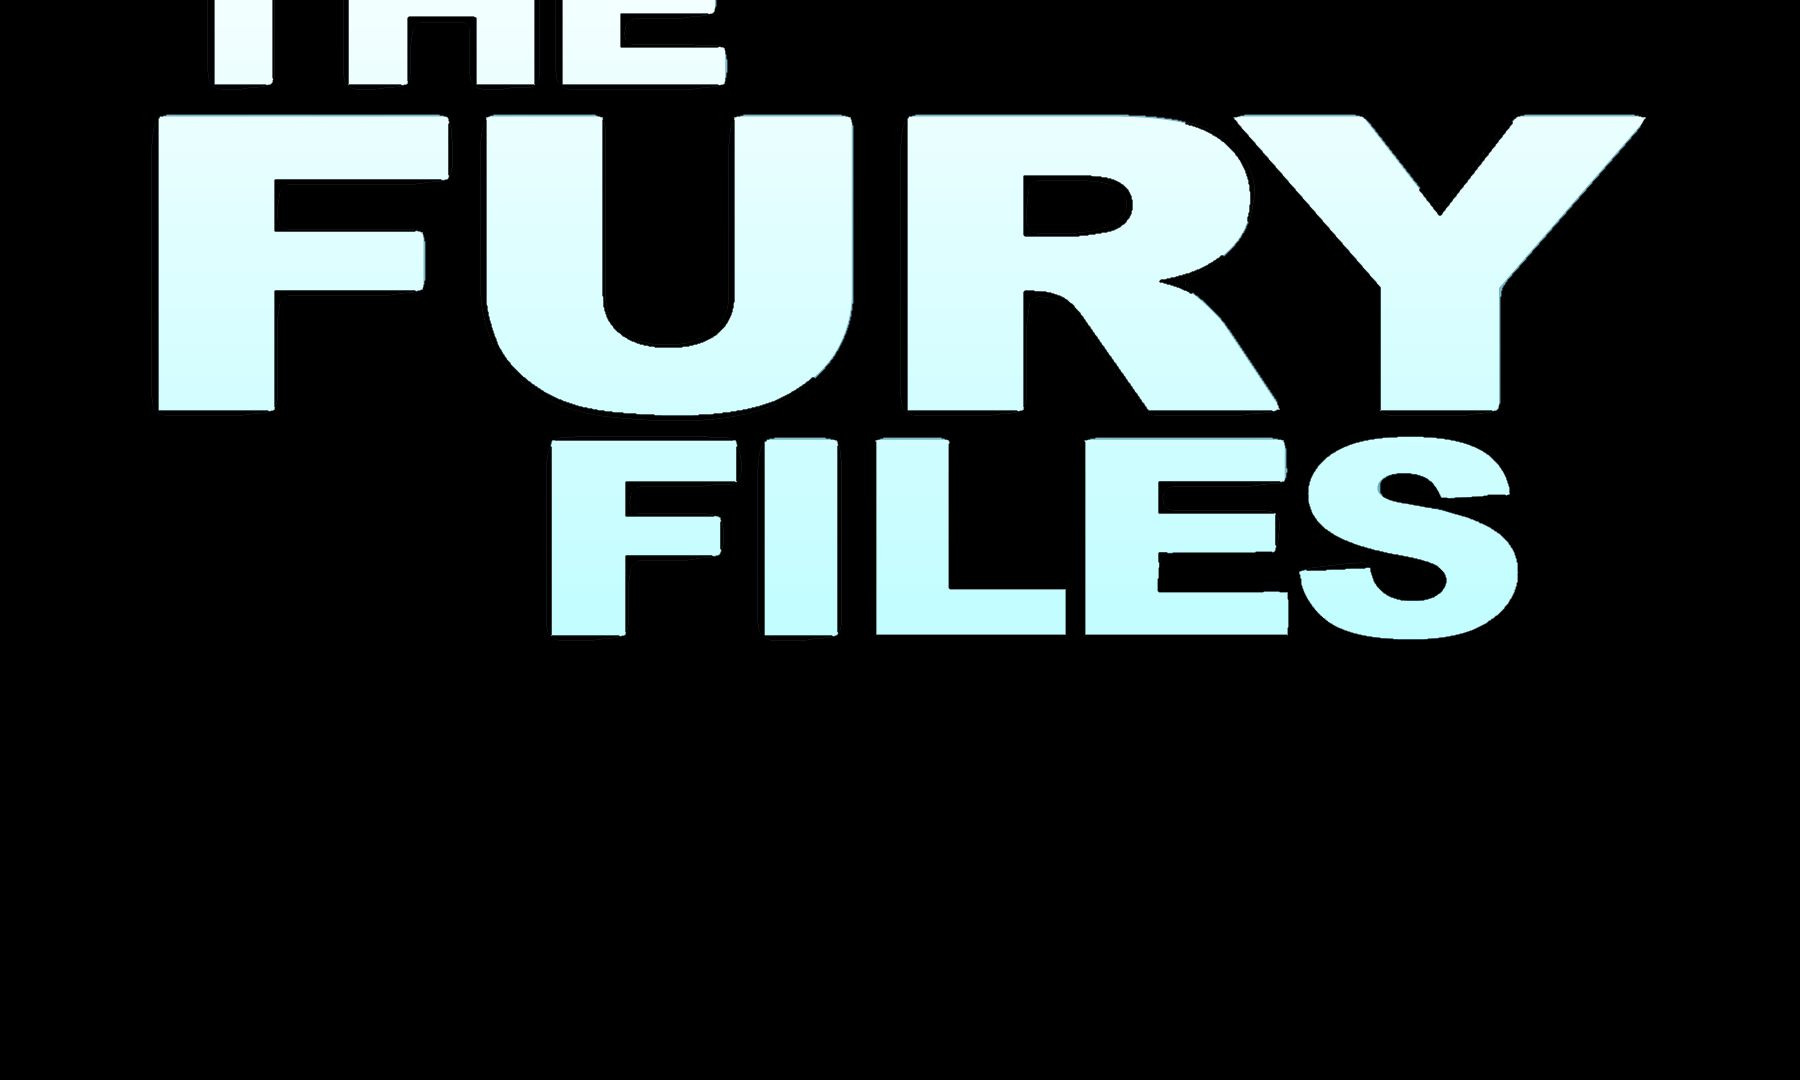 Show Fury Files